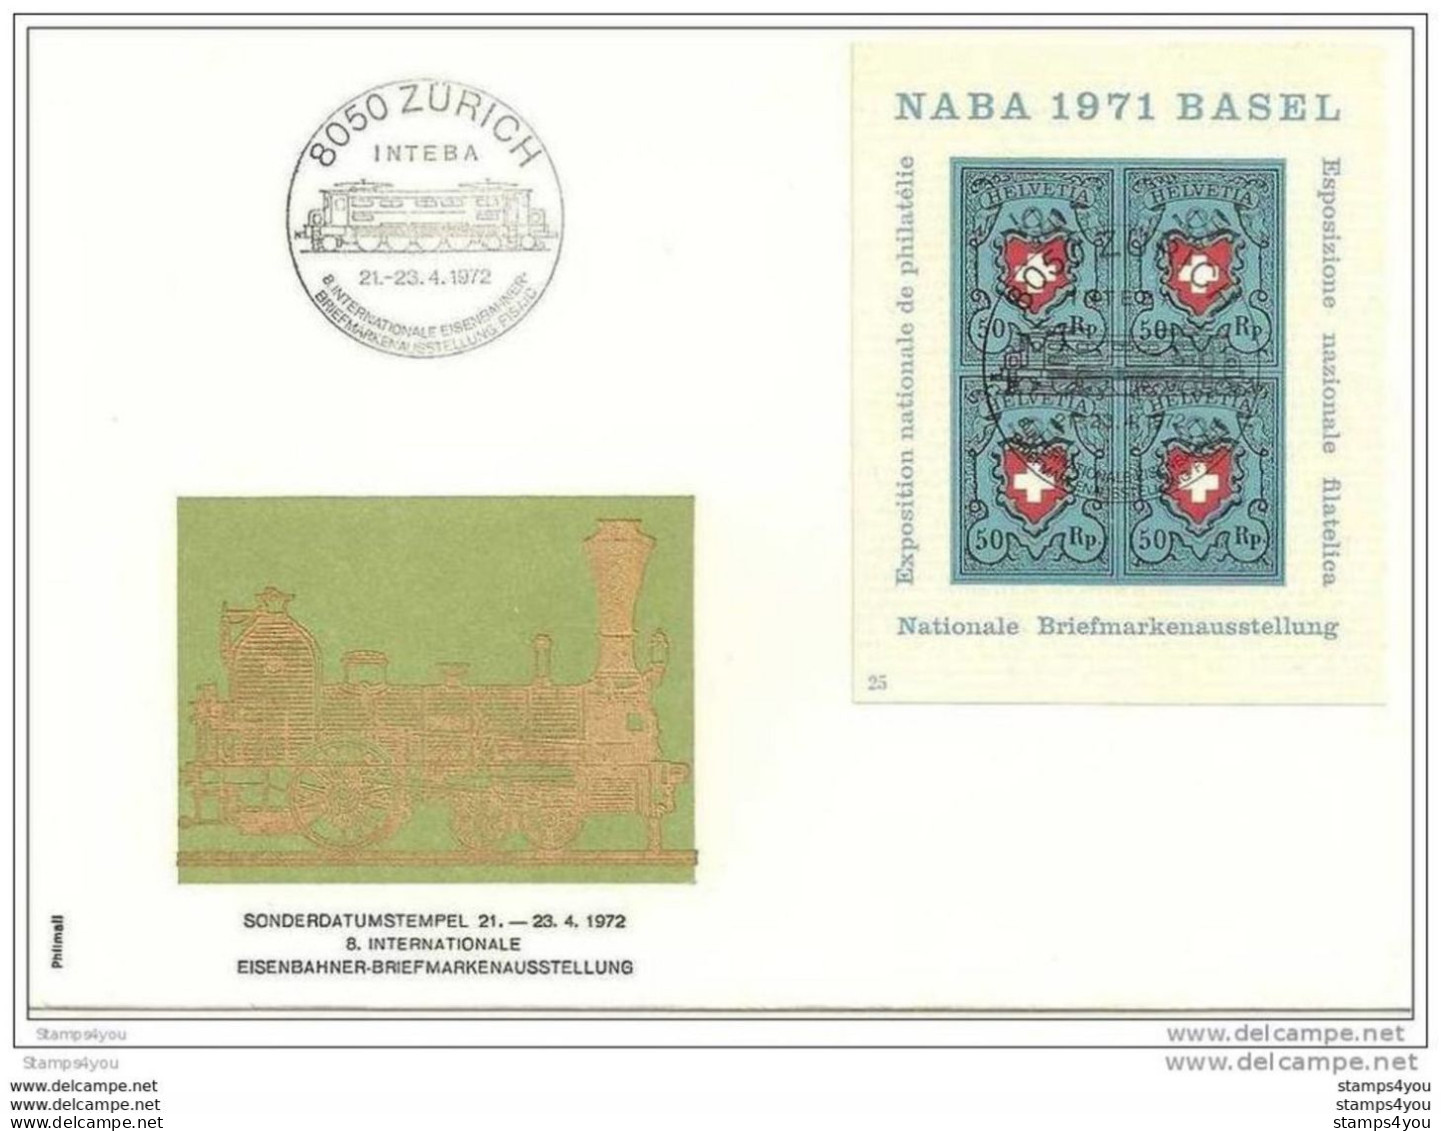 190 - 60 - Enveloppe Avec Oblit Spécaile "Inteba" Zürich 1972 - Postmark Collection